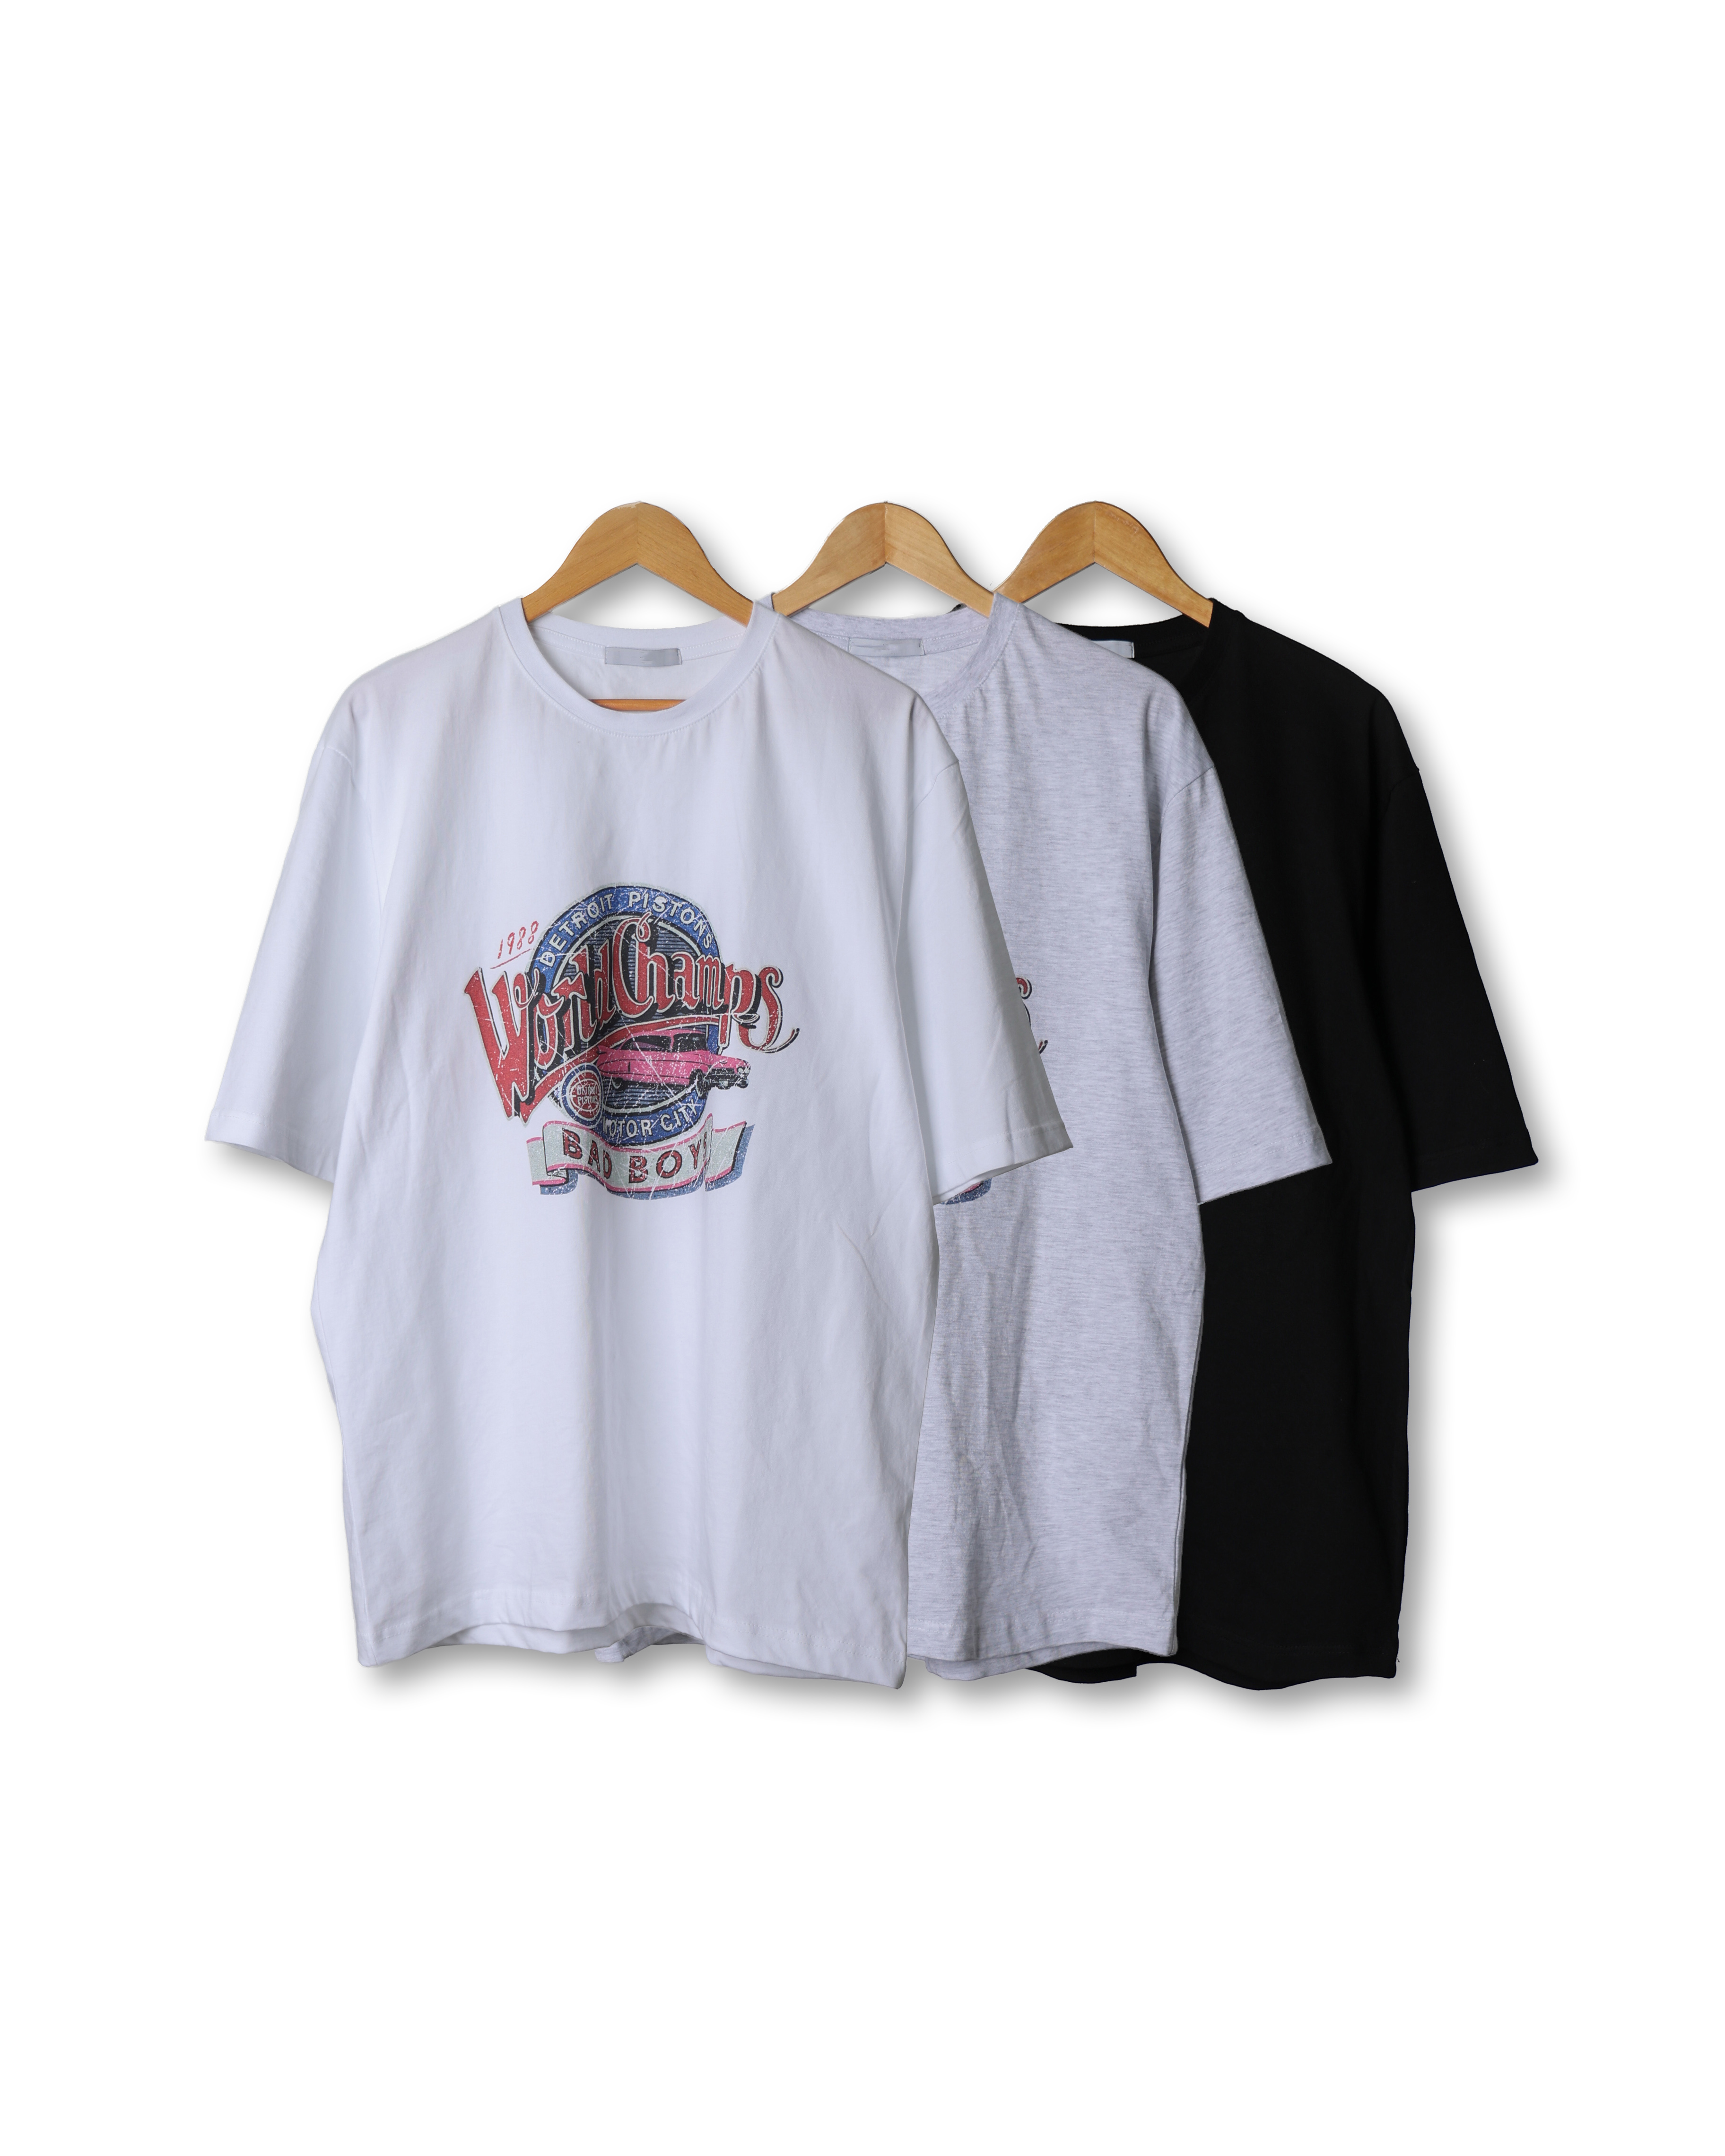 BOLLW WORLD CHAMPS Vintage T Shirts (Black/Light Gray/White) - 2차 리오더 (5/14 배송예정)